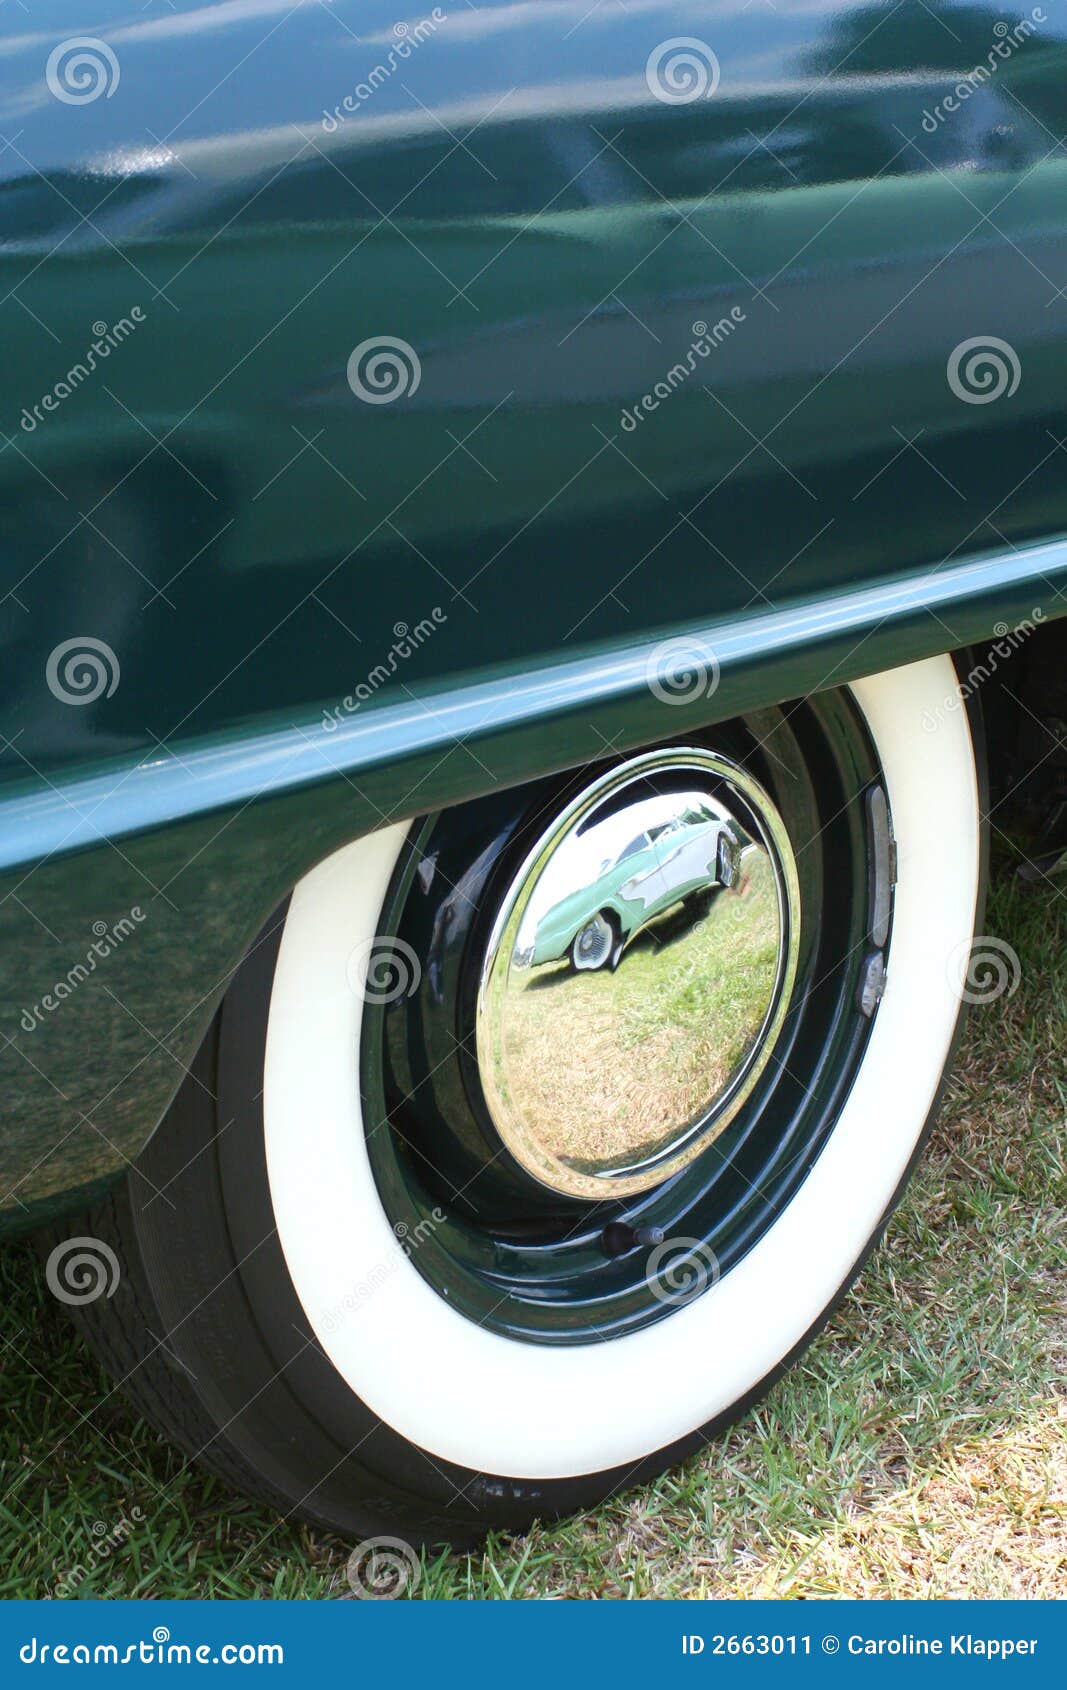 classic-car-whitewall-tires-2663011.jpg